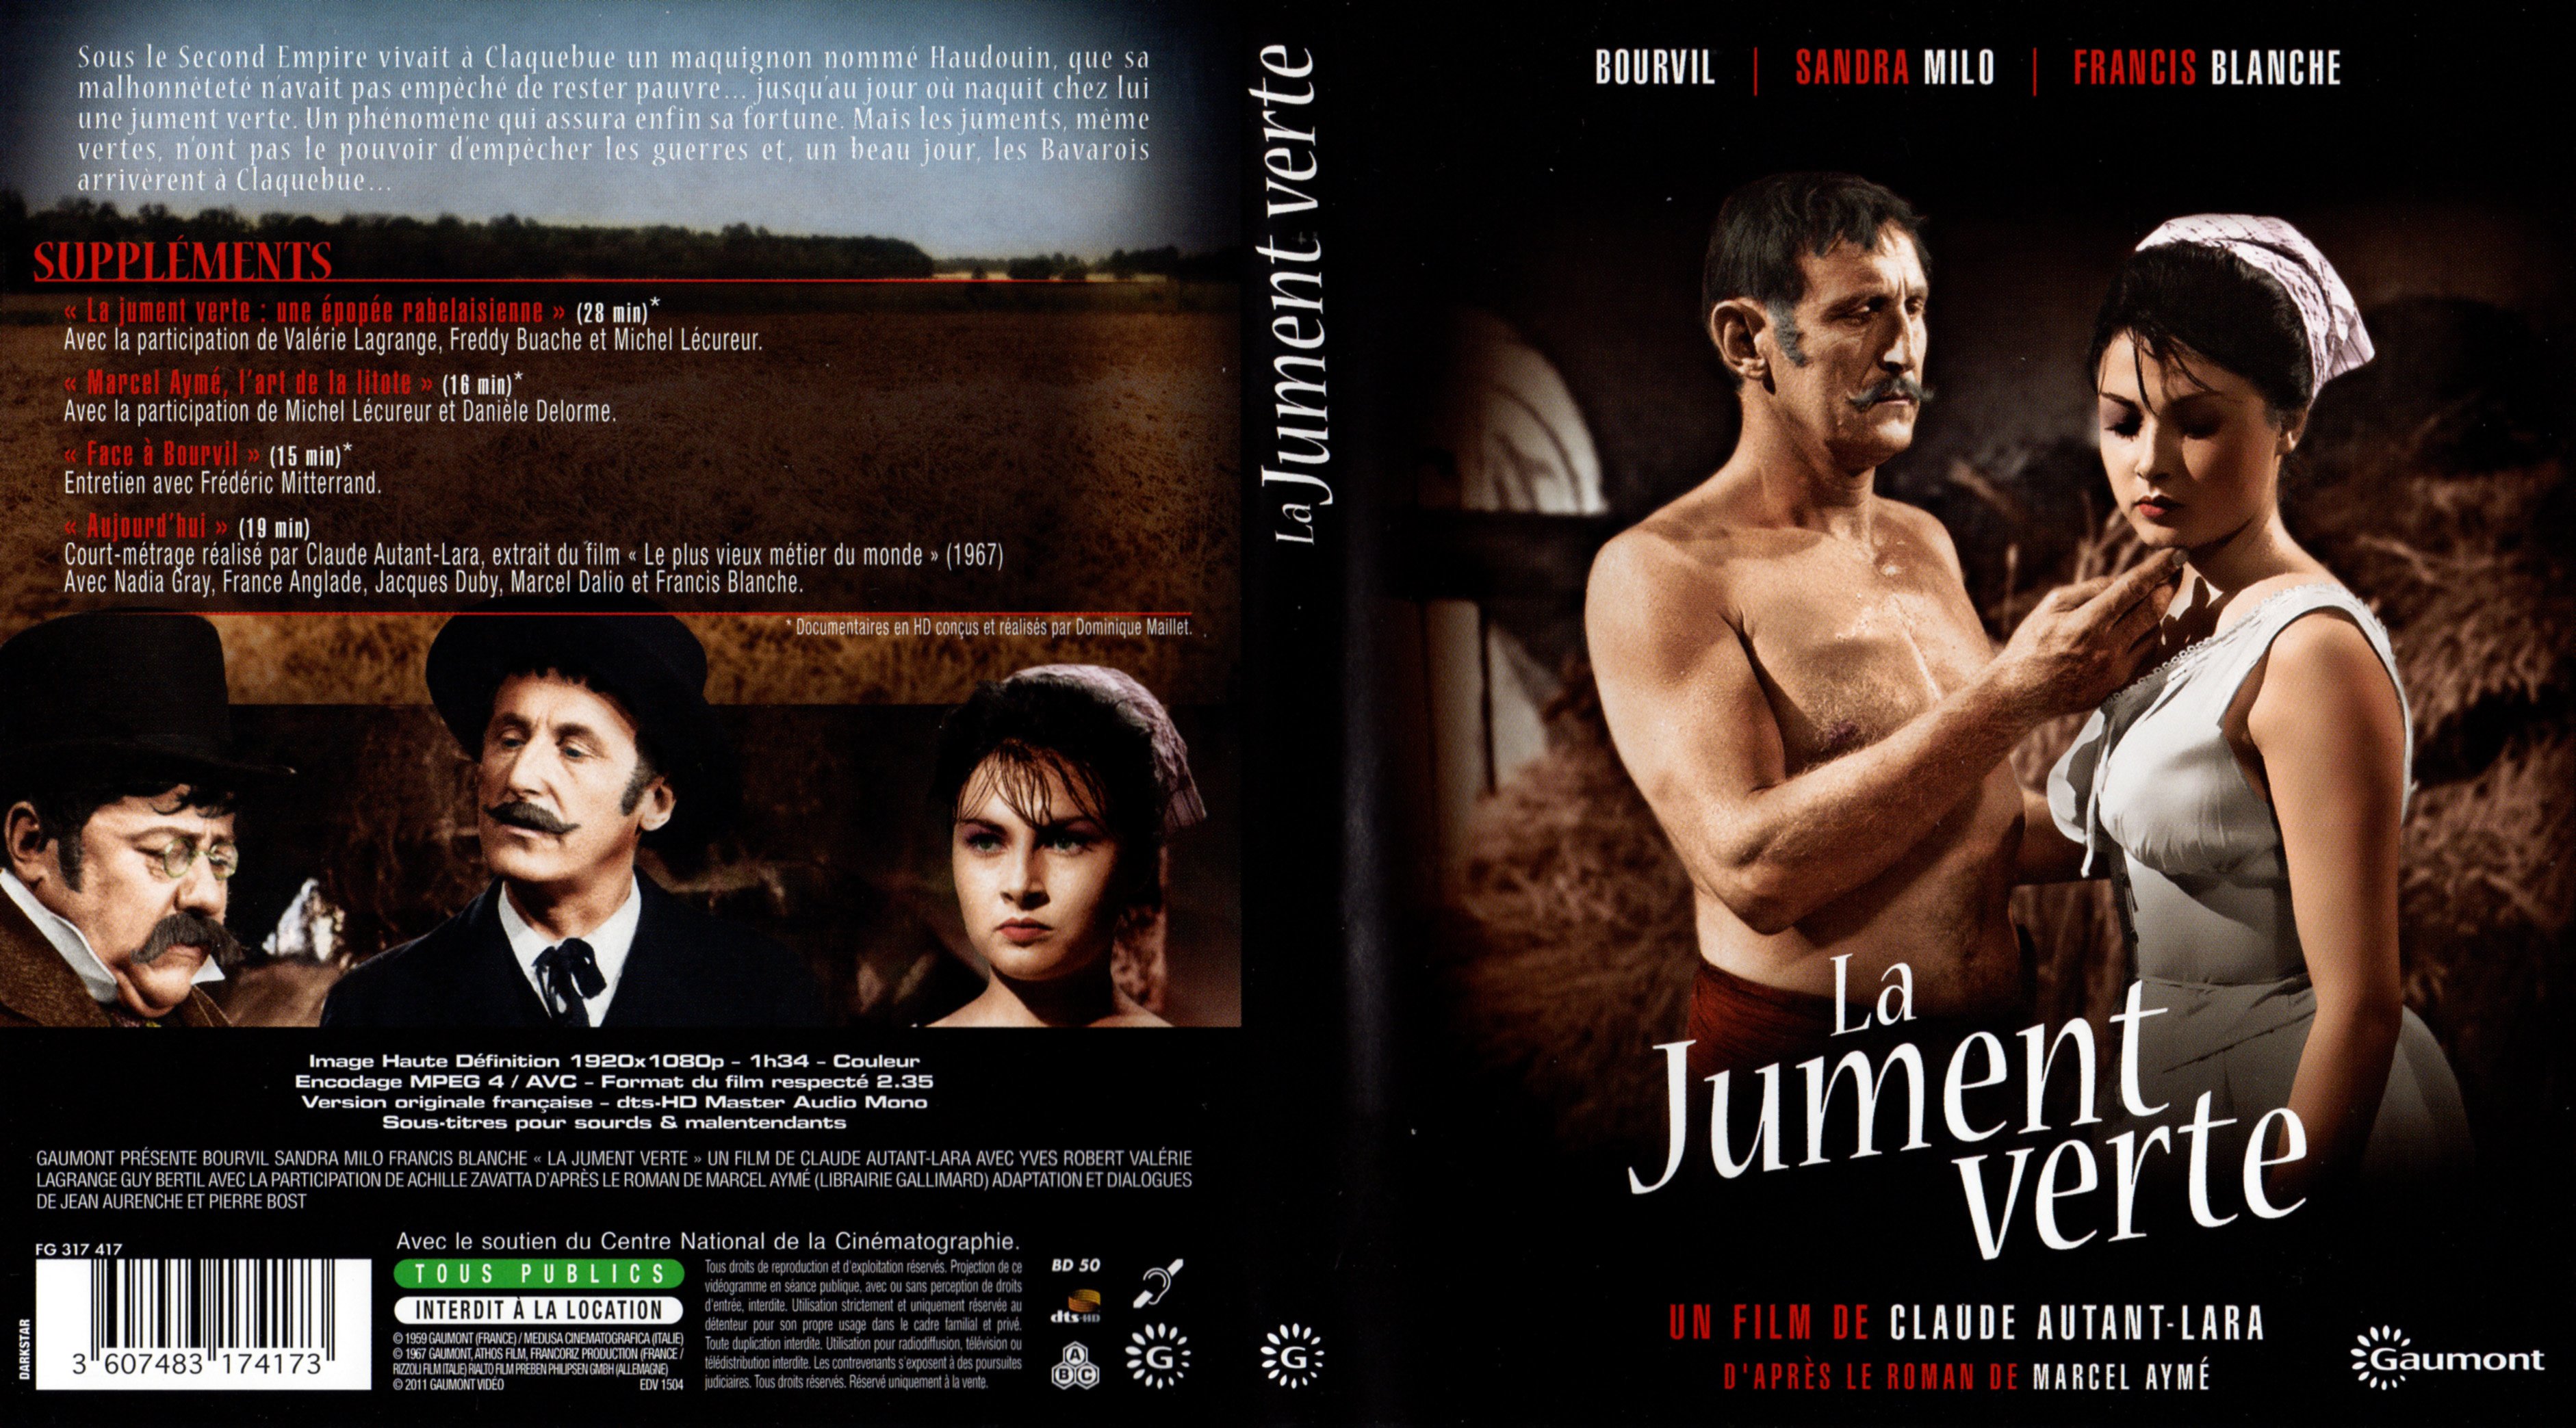 Jaquette DVD La jument verte (BLU-RAY)